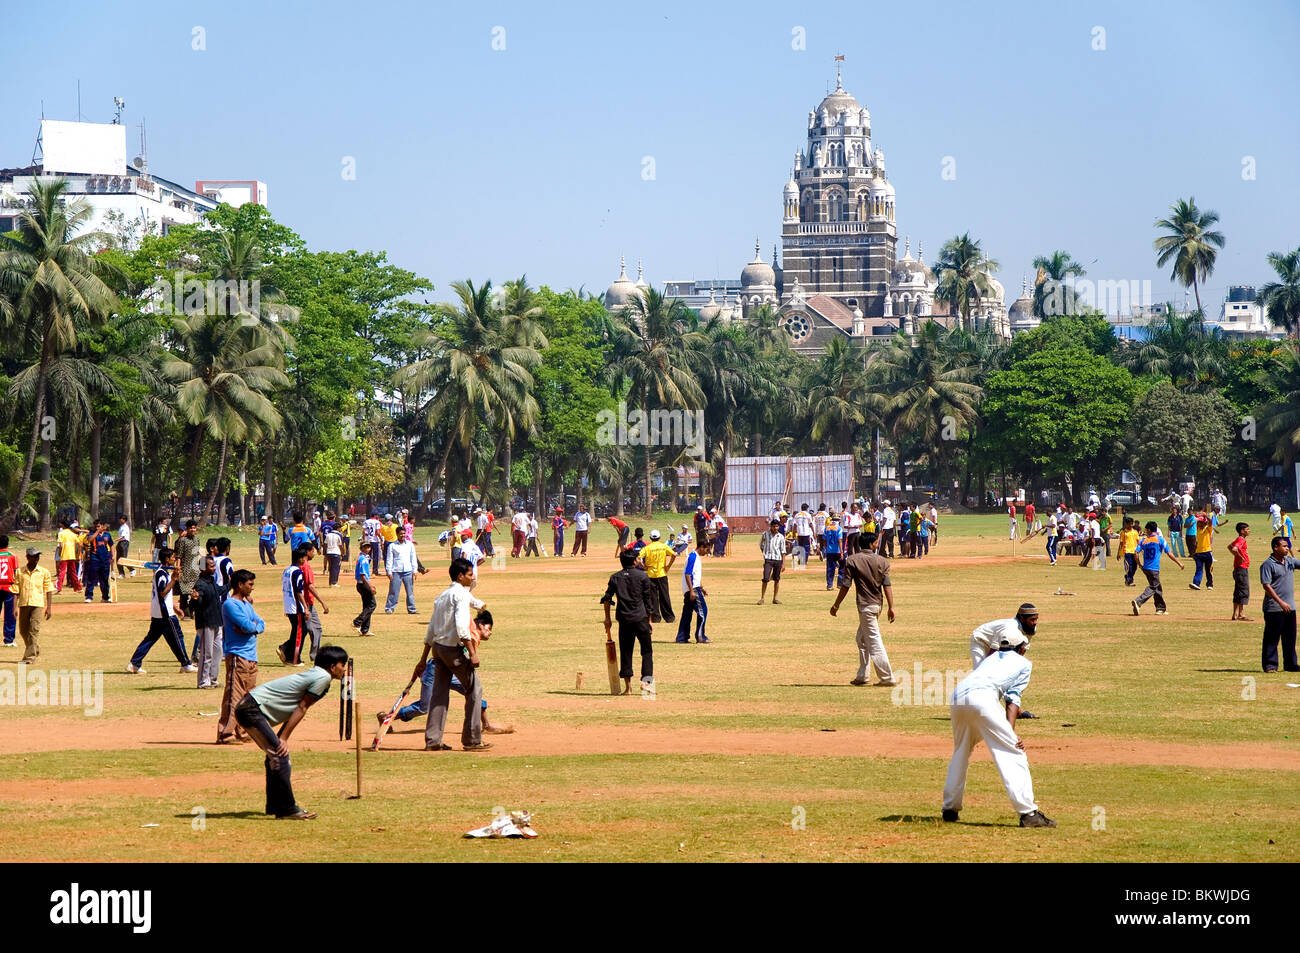 Cricket In Mumbai